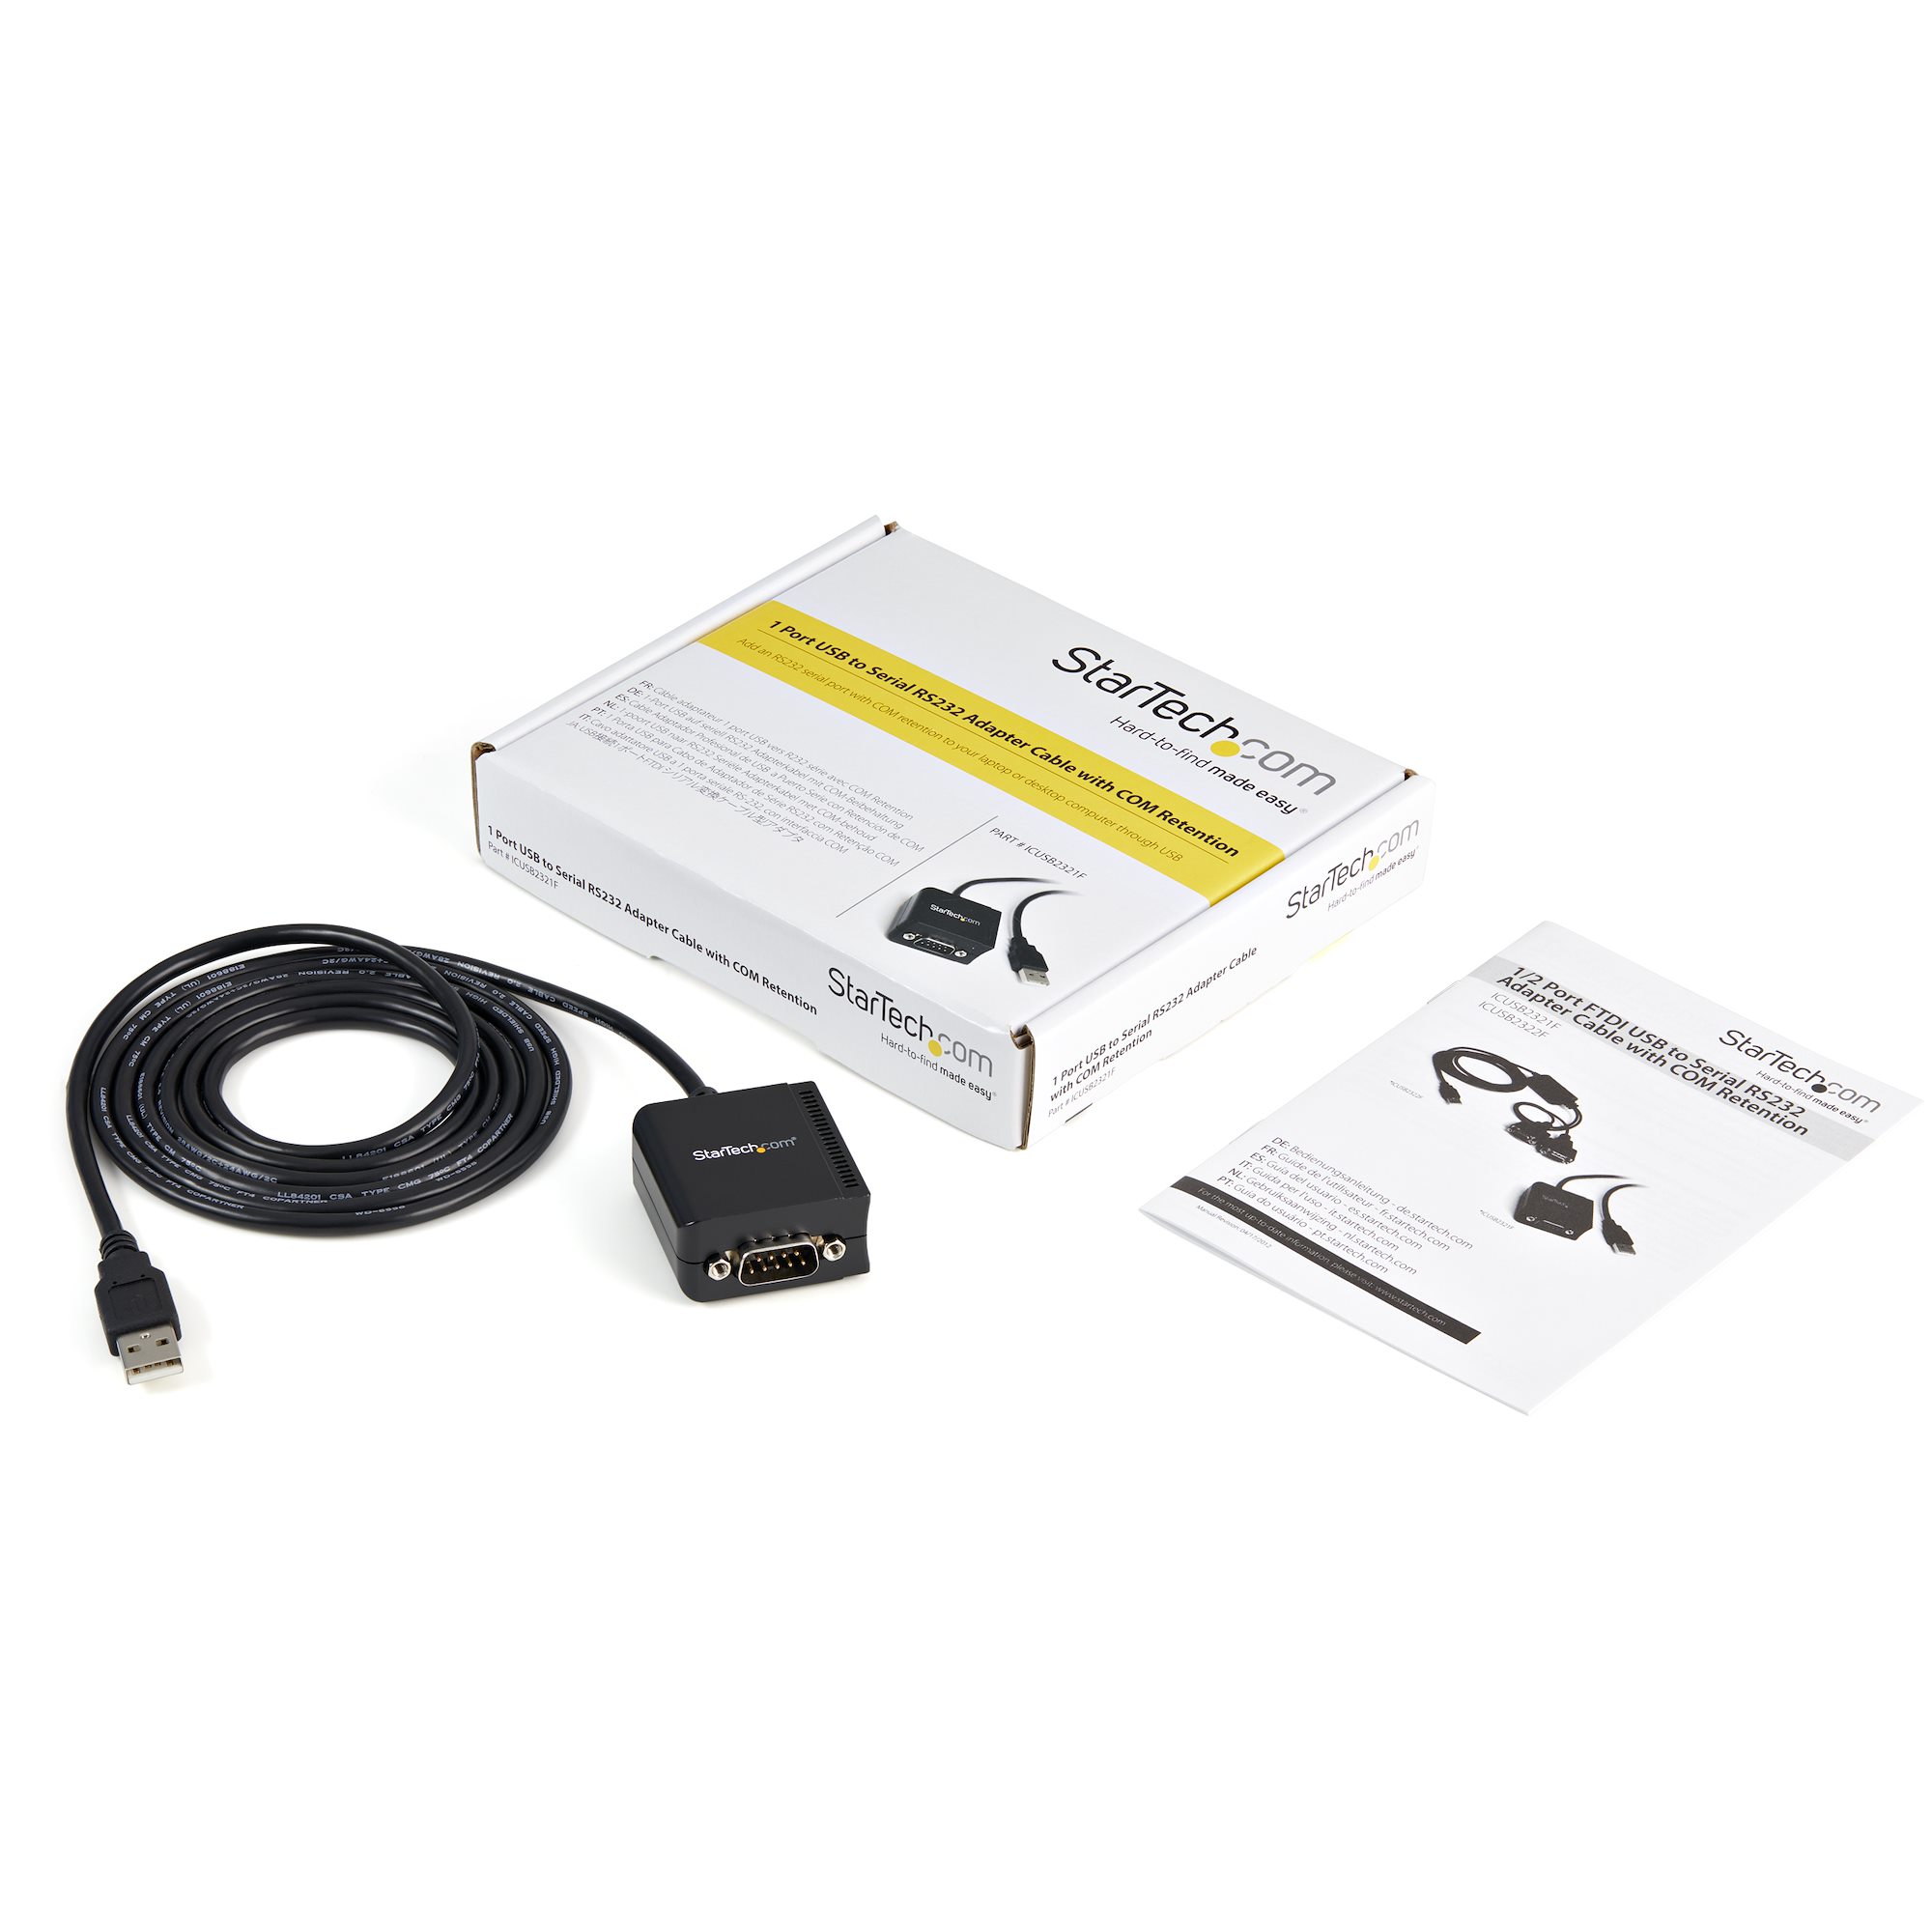 StarTech.com USB to Serial Adapter Hub USB Serial 9-pin Bus Powered DB9 FTDI USB to Serial Adapter 4 Port 